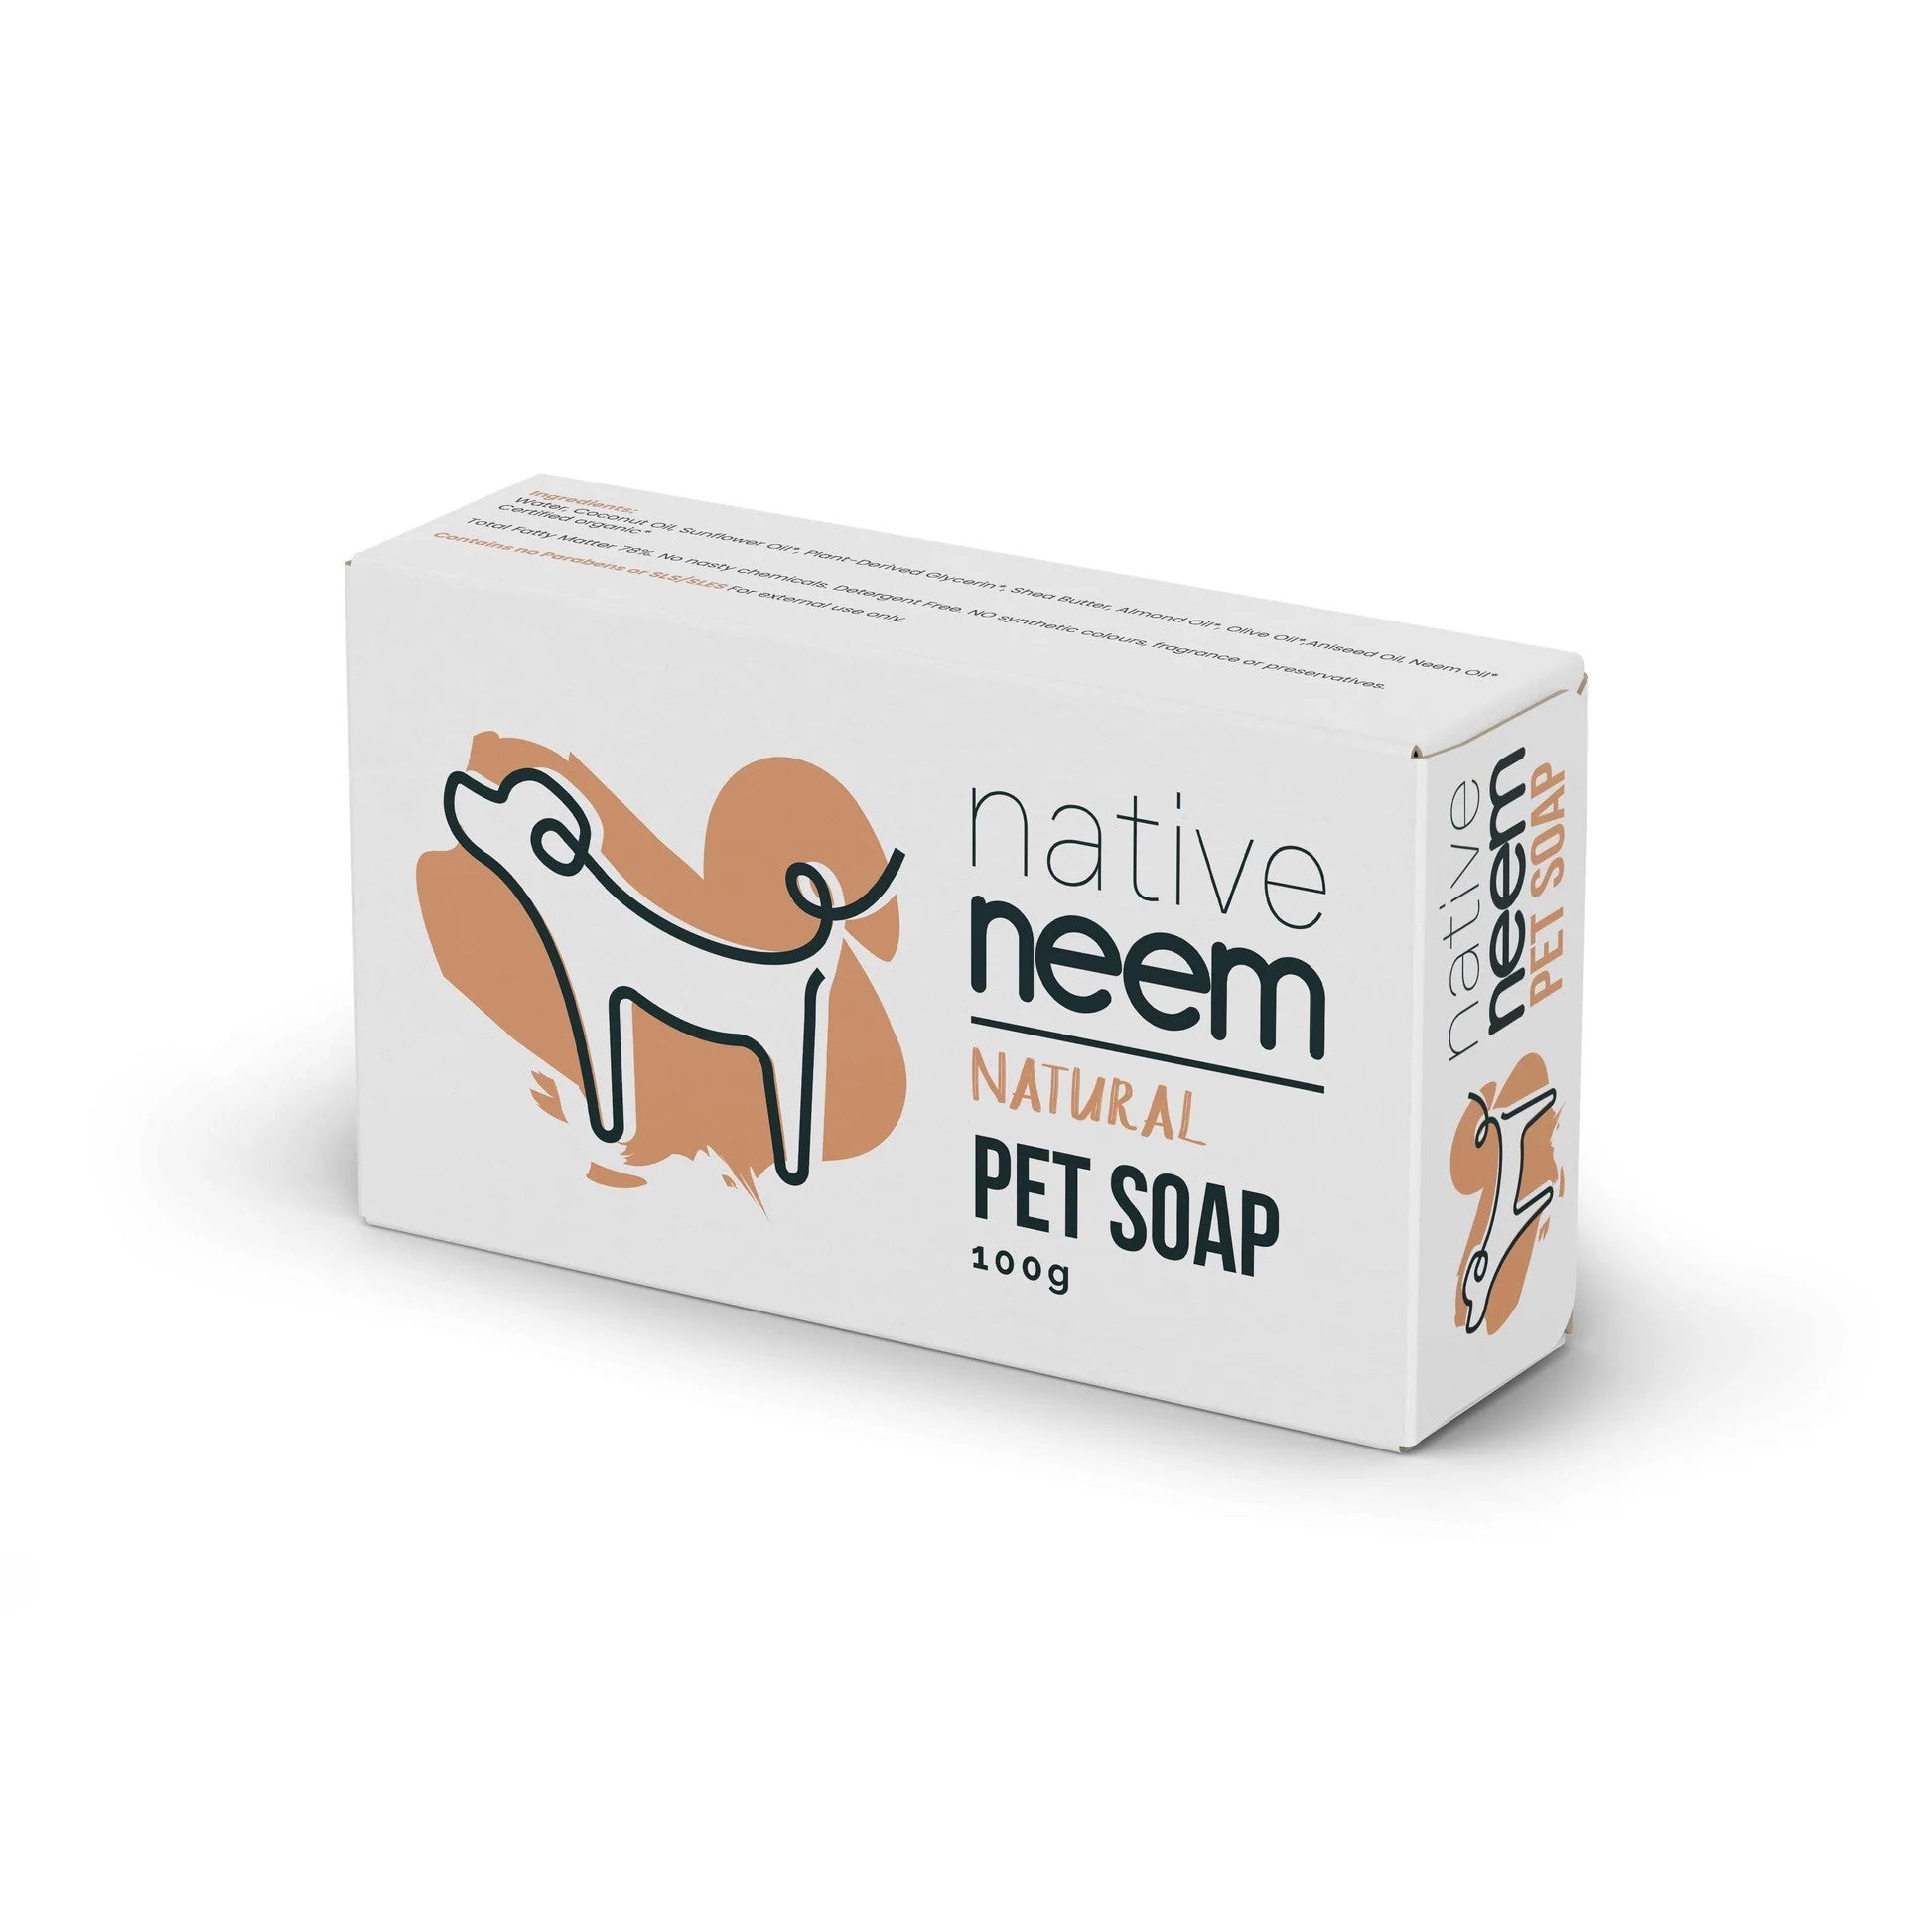 Native Neem Toiletries Native Neem Natural Pet Soap 100g